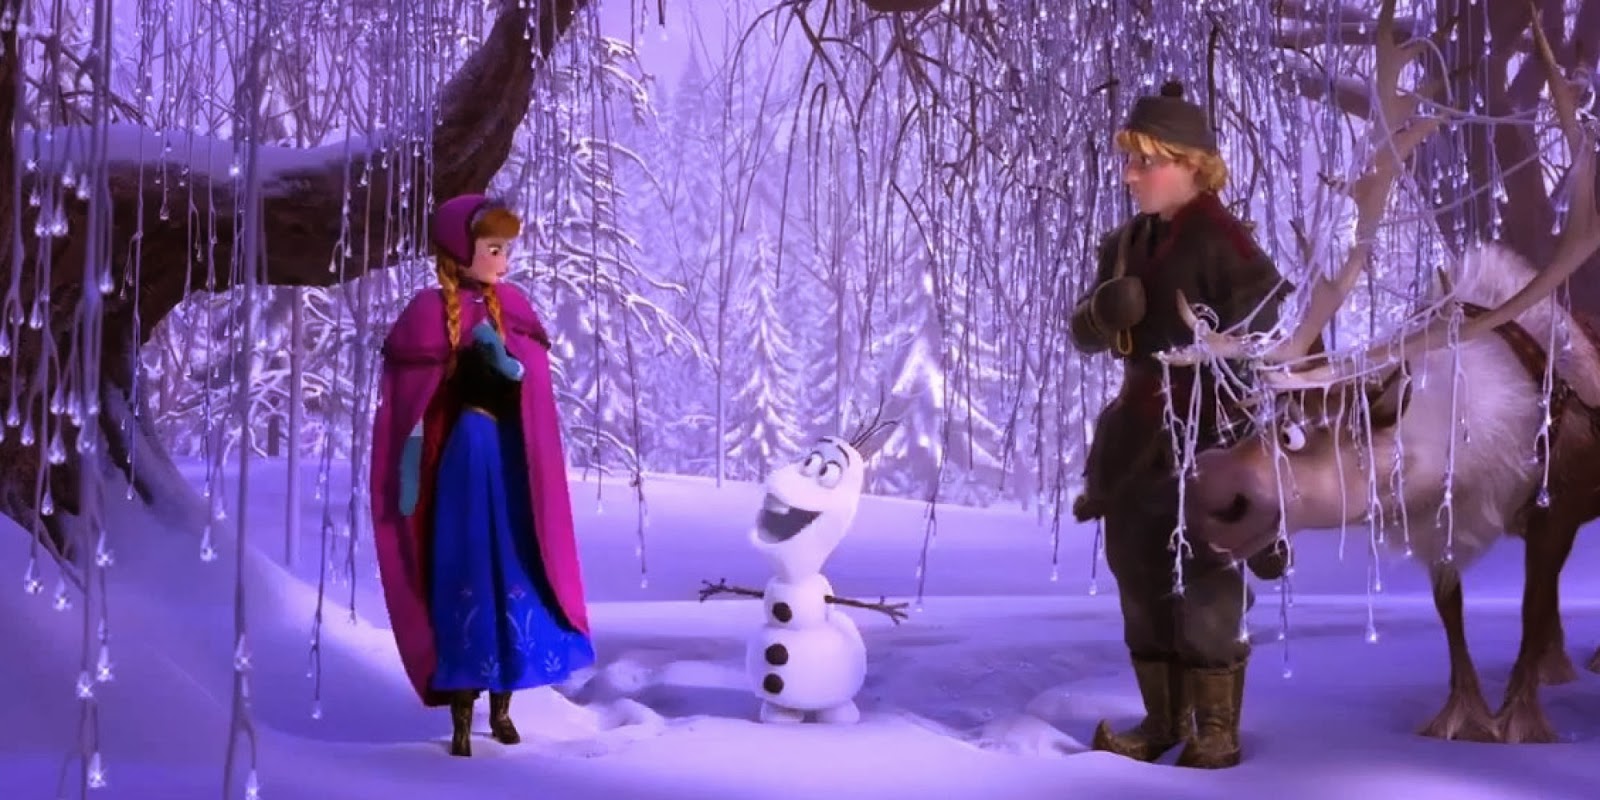 Verhandeling Verlammen Onrustig A Mighty Fine Blog: Film Review: Frozen (2013)